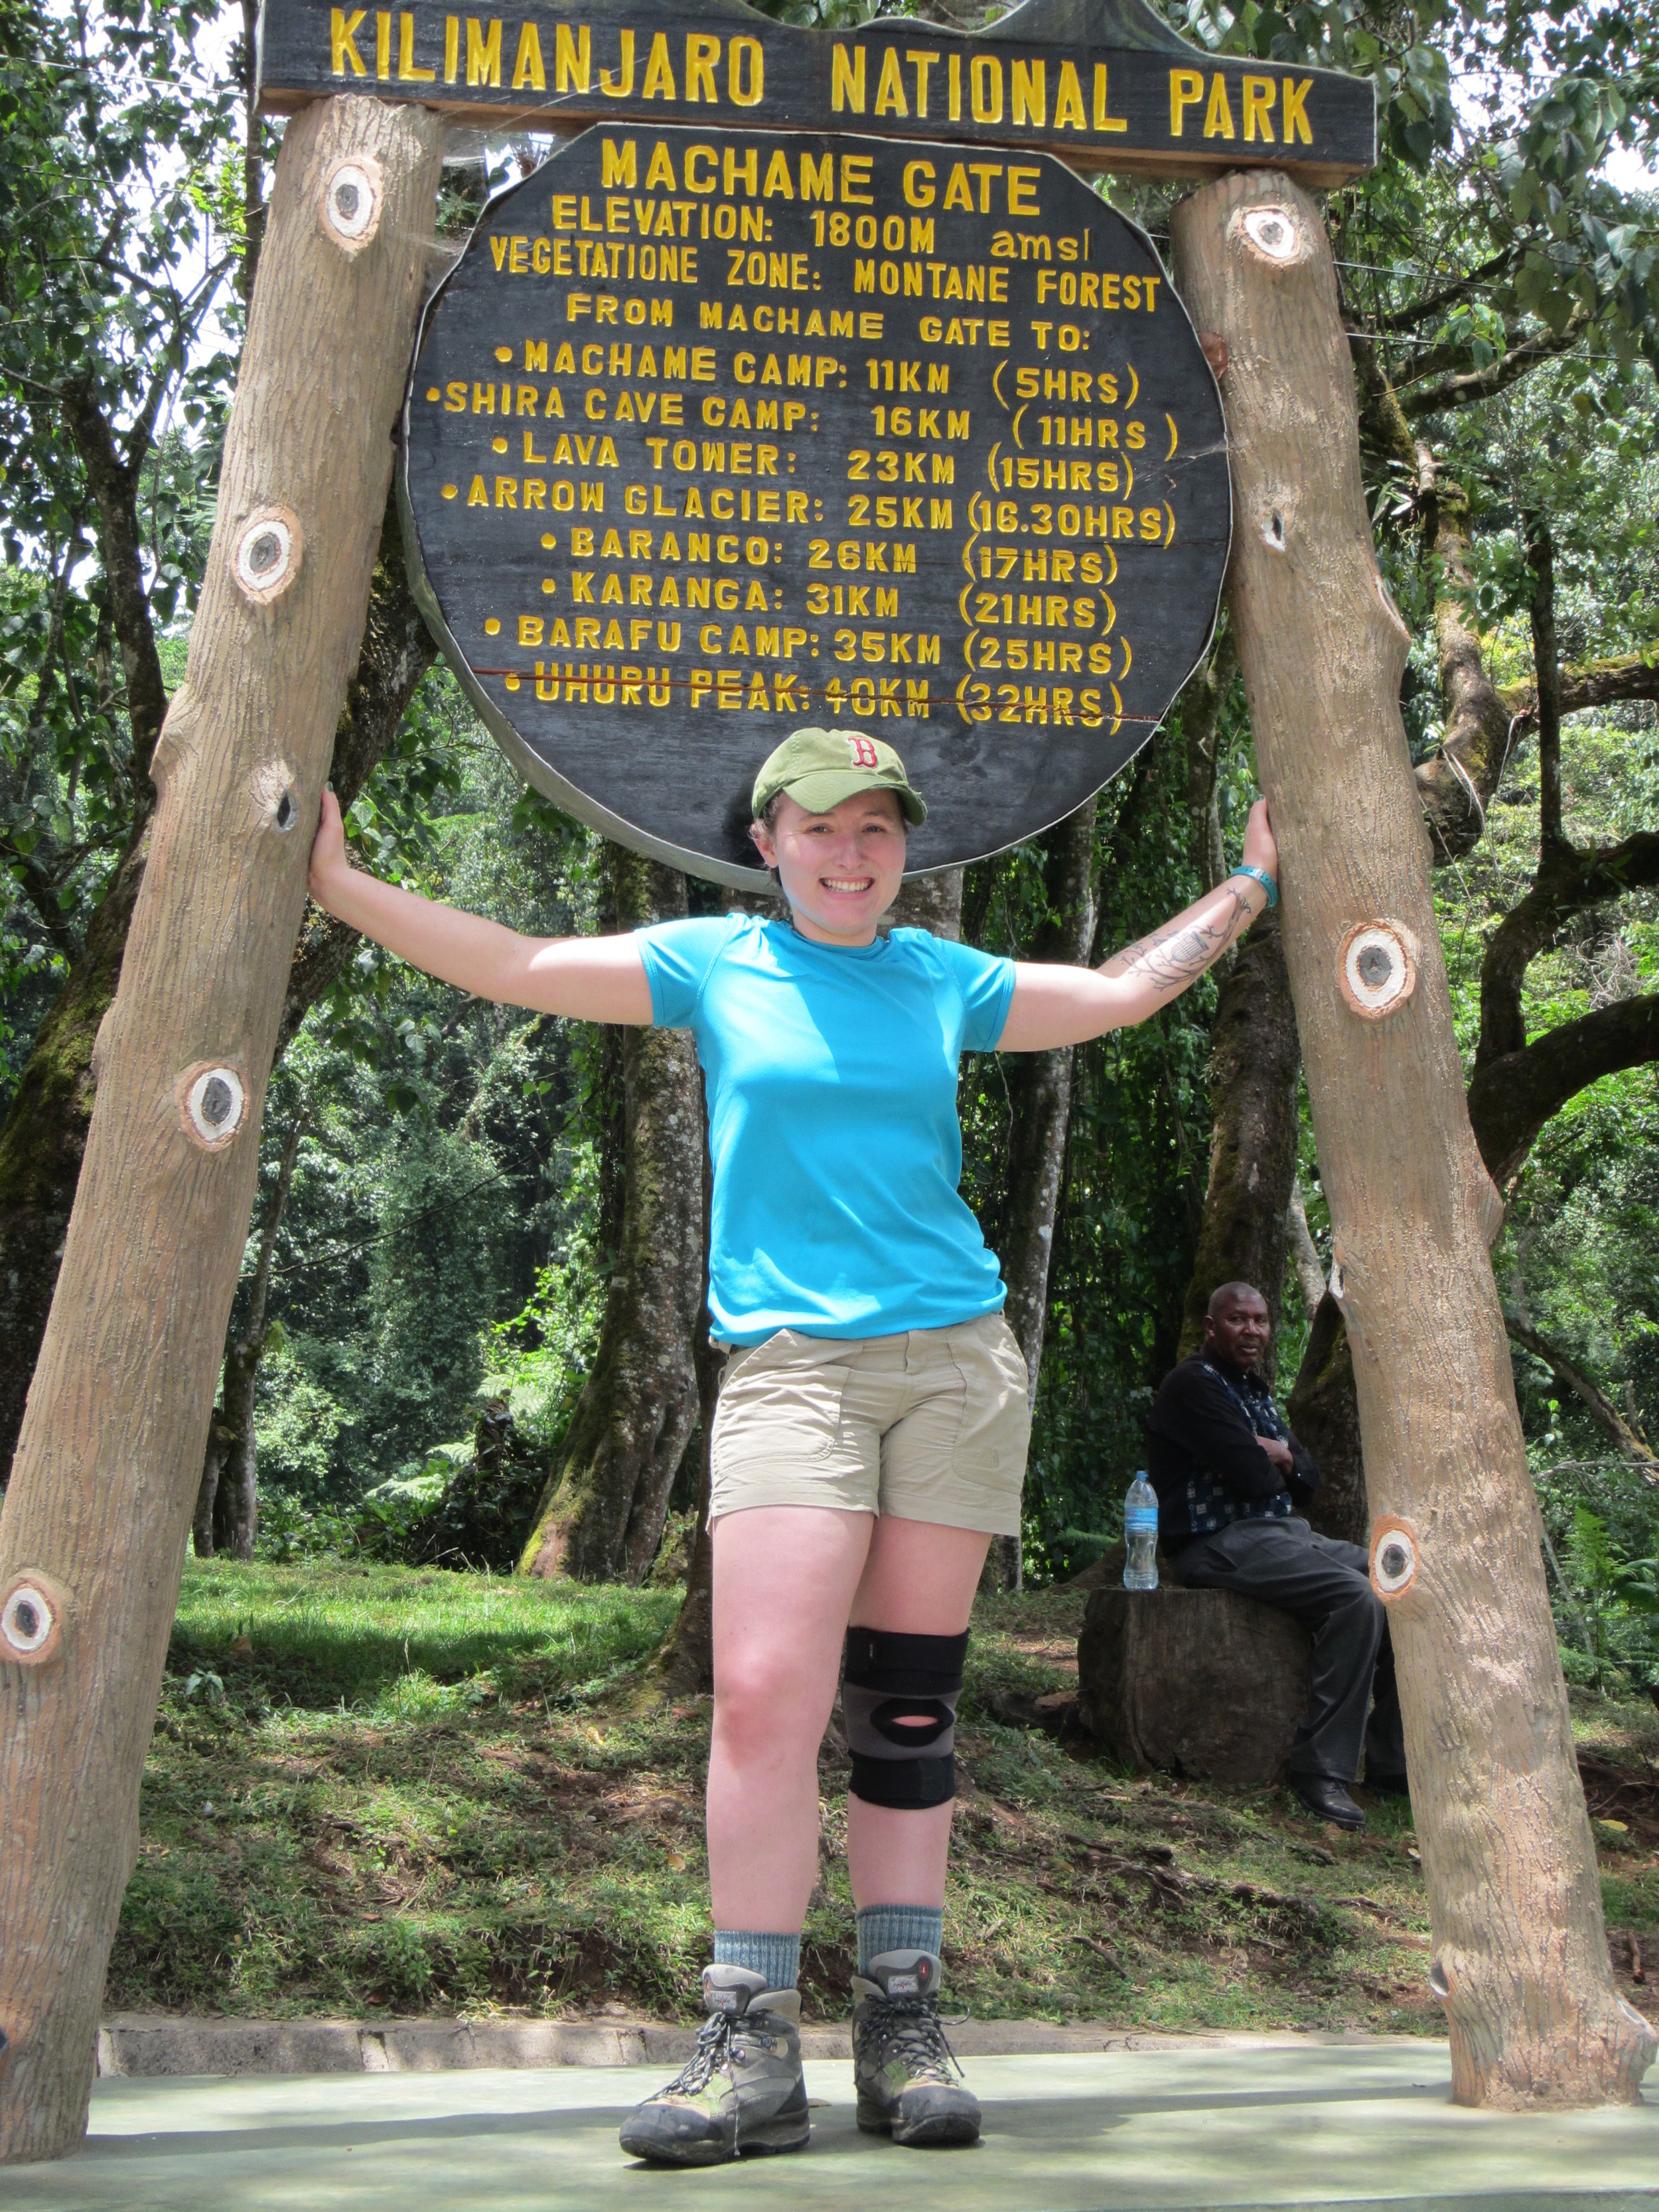  Tips for climbing Mount Kilimanjaro 